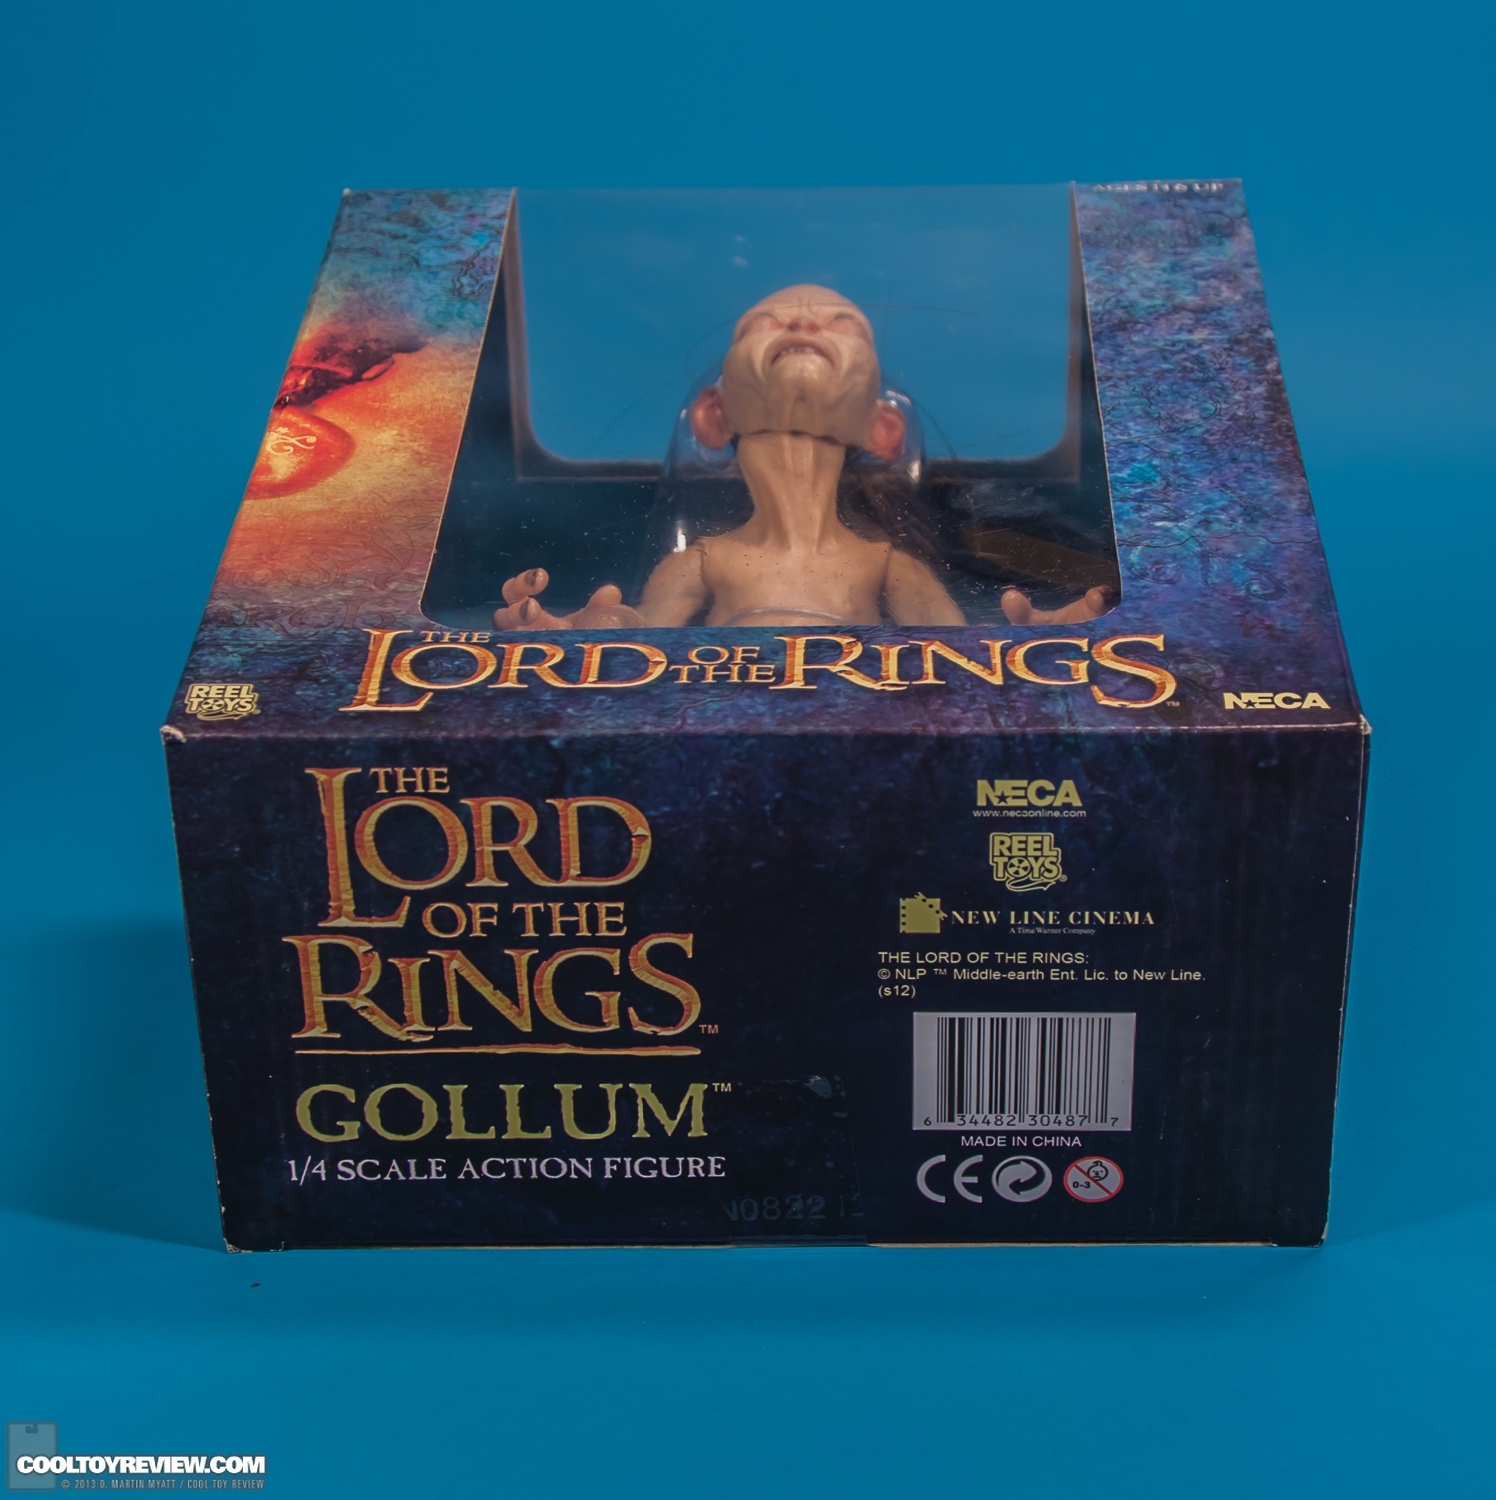 Gollum_Lord_Of_The_Rings_NECA-020.jpg